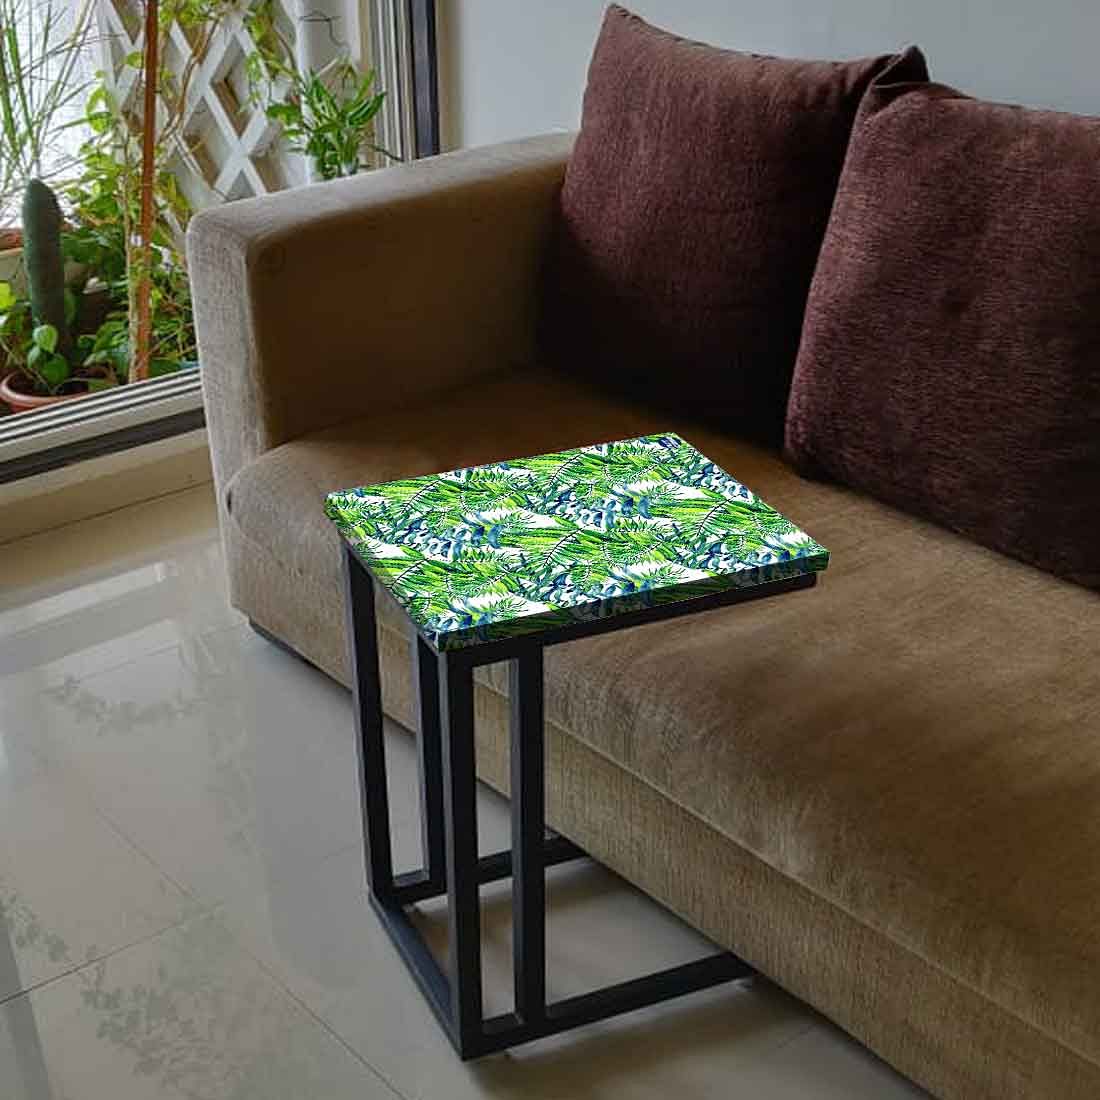 Black Metal C Table for Sofa - Green Leaf Nutcase